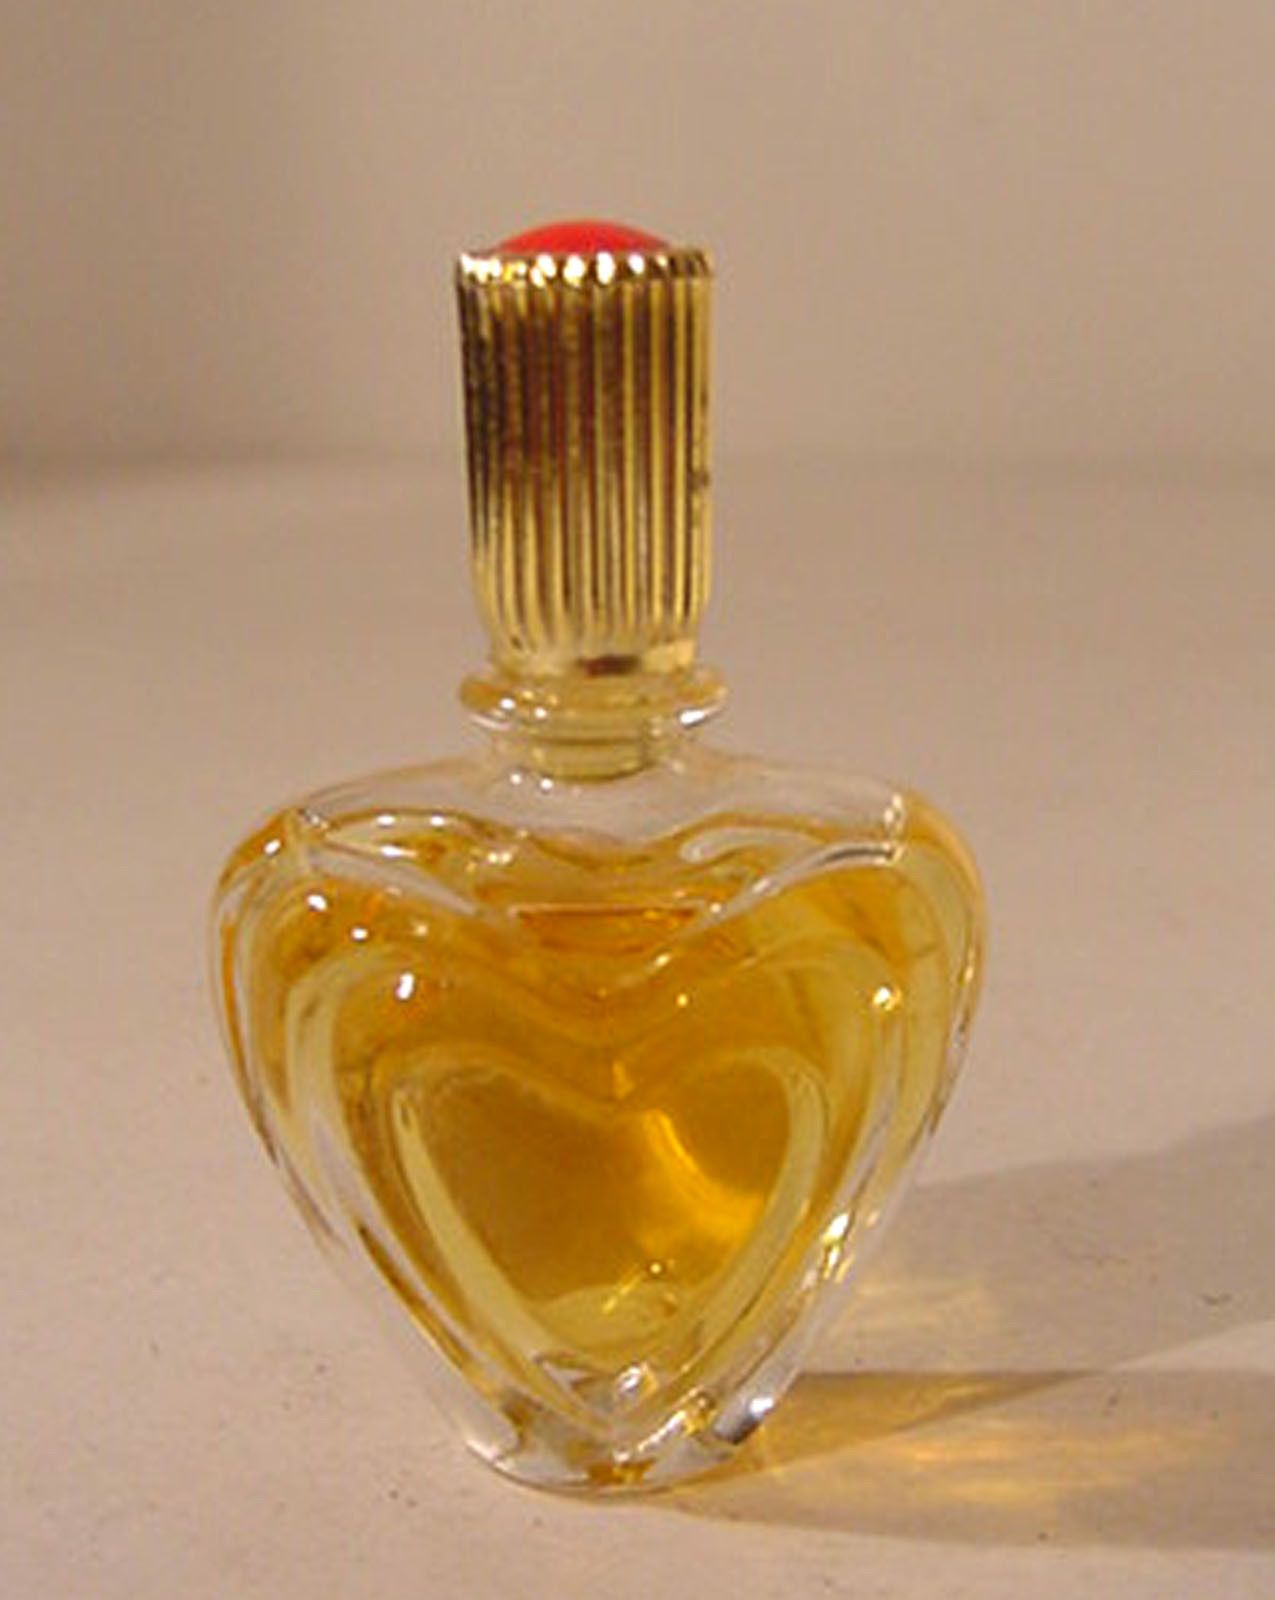 Escada Perfume EDP Mini Margaretha Ley .14 oz 4 ml Splash Heart Bottle